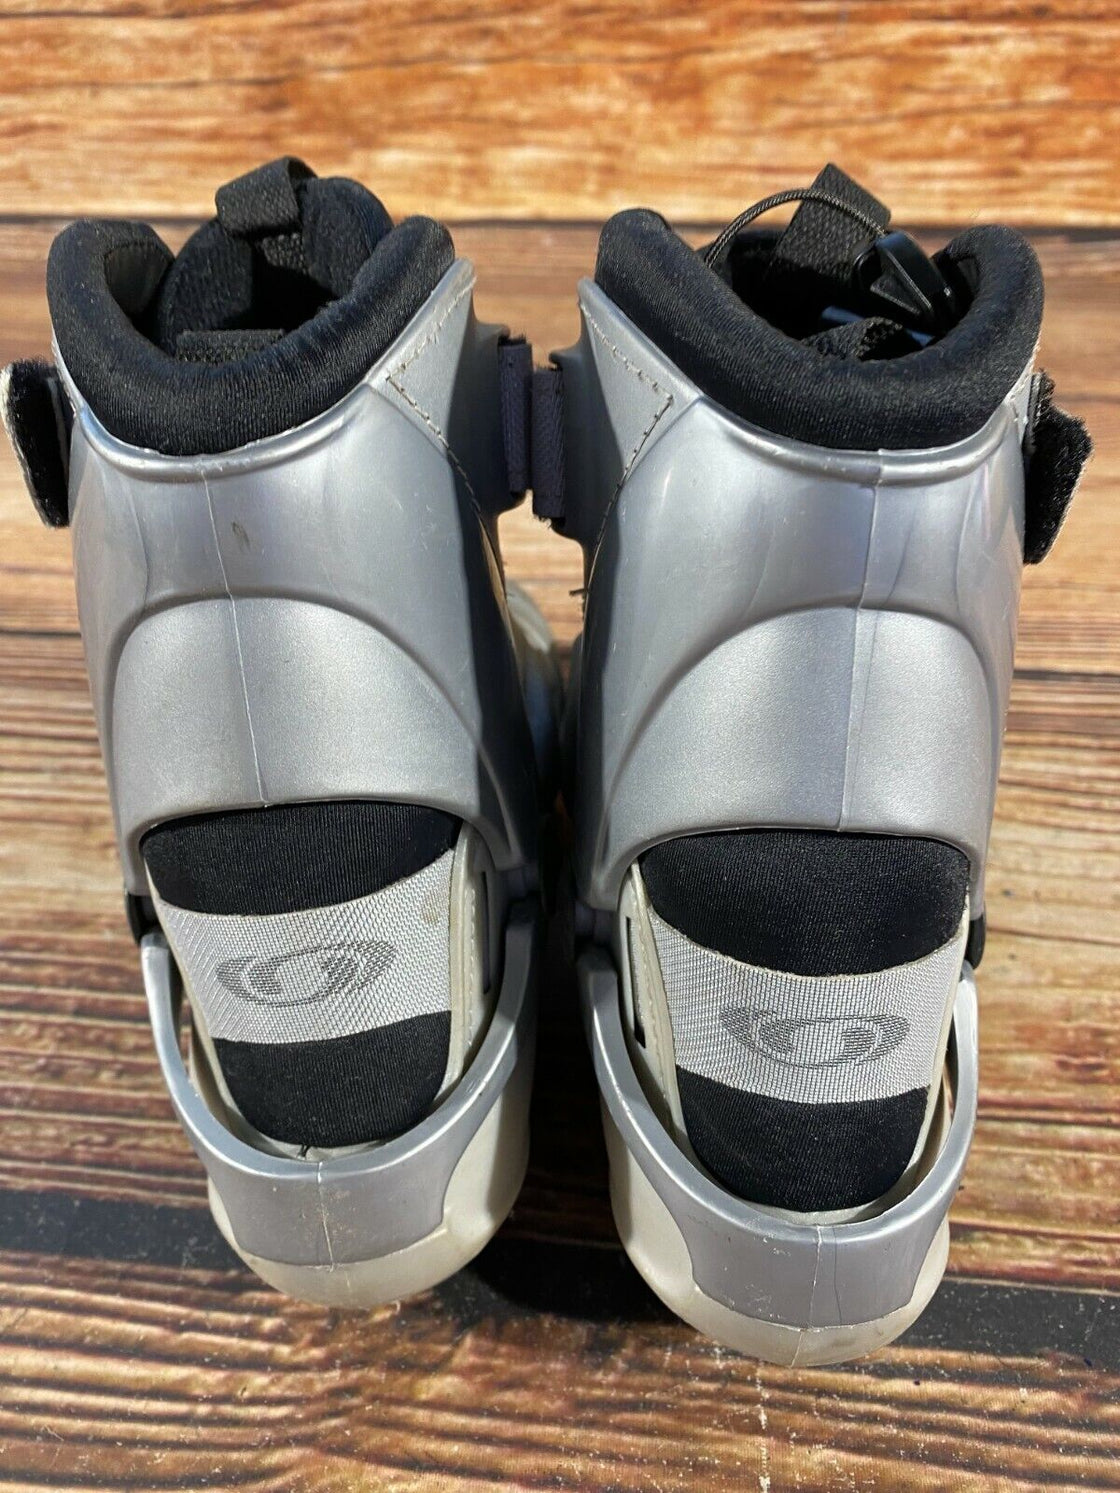 Salomon Cross Country Ski Boots Size EU37 1/3 US5 for SNS Profil